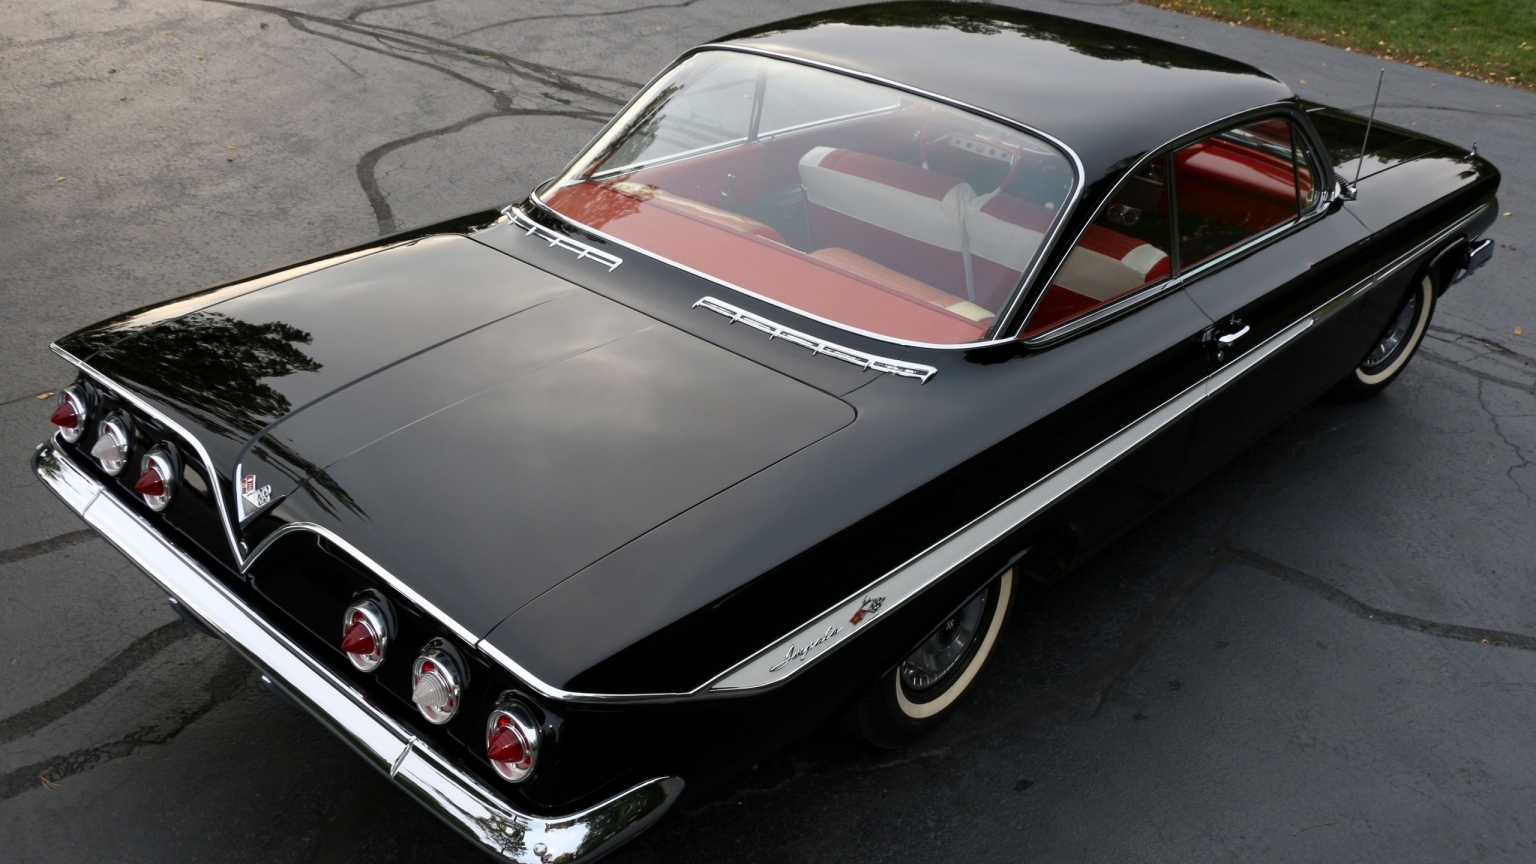 Black Chevrolet Impala 1961 for 1536 x 864 HDTV resolution